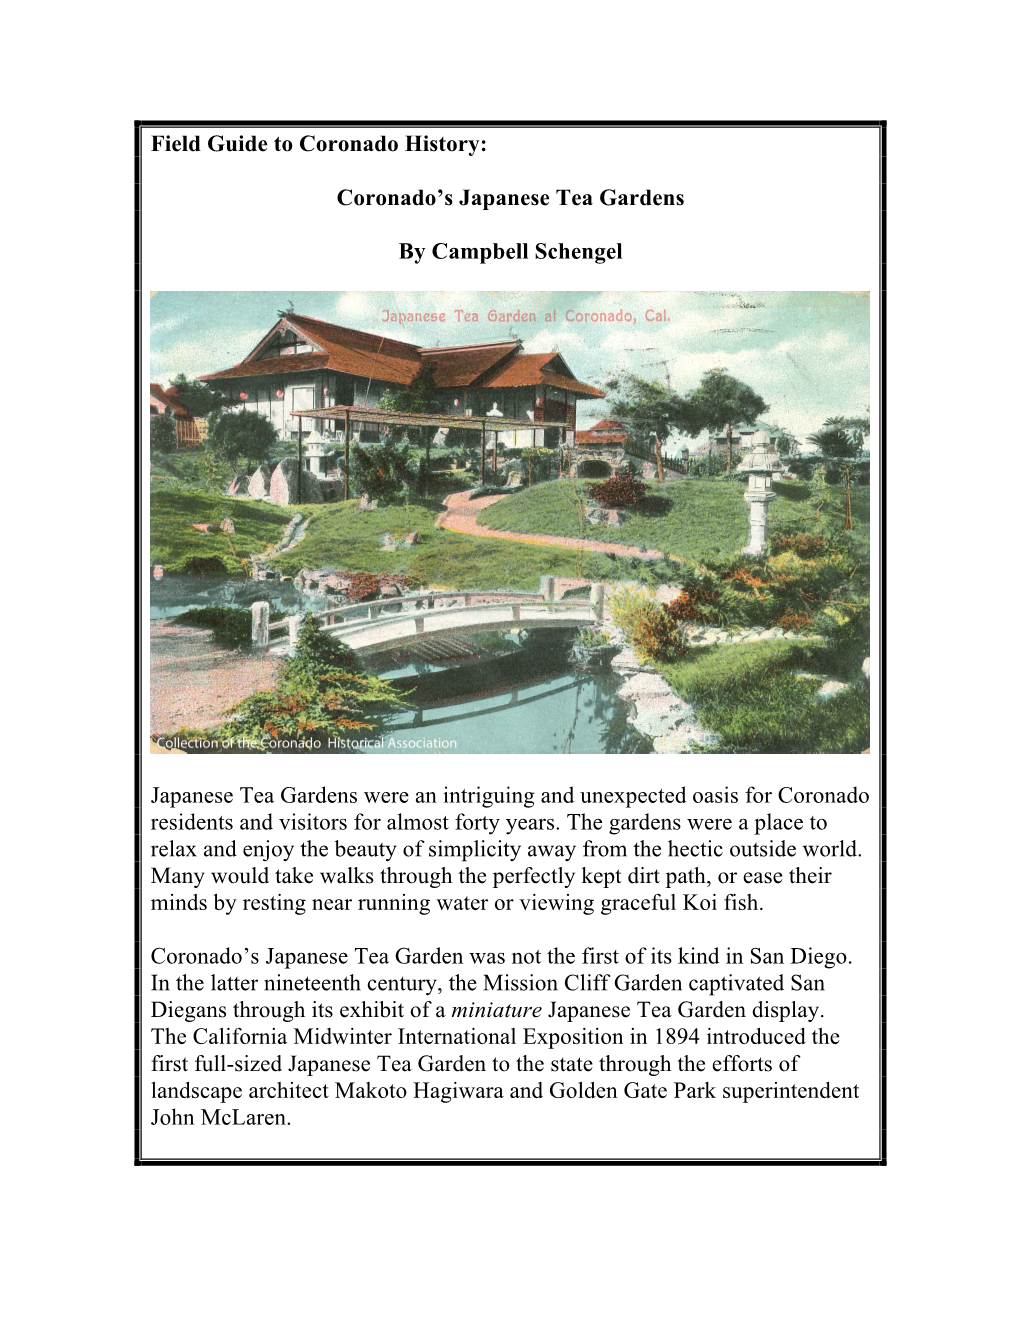 Field Guide to Coronado History: Coronado's Japanese Tea Gardens